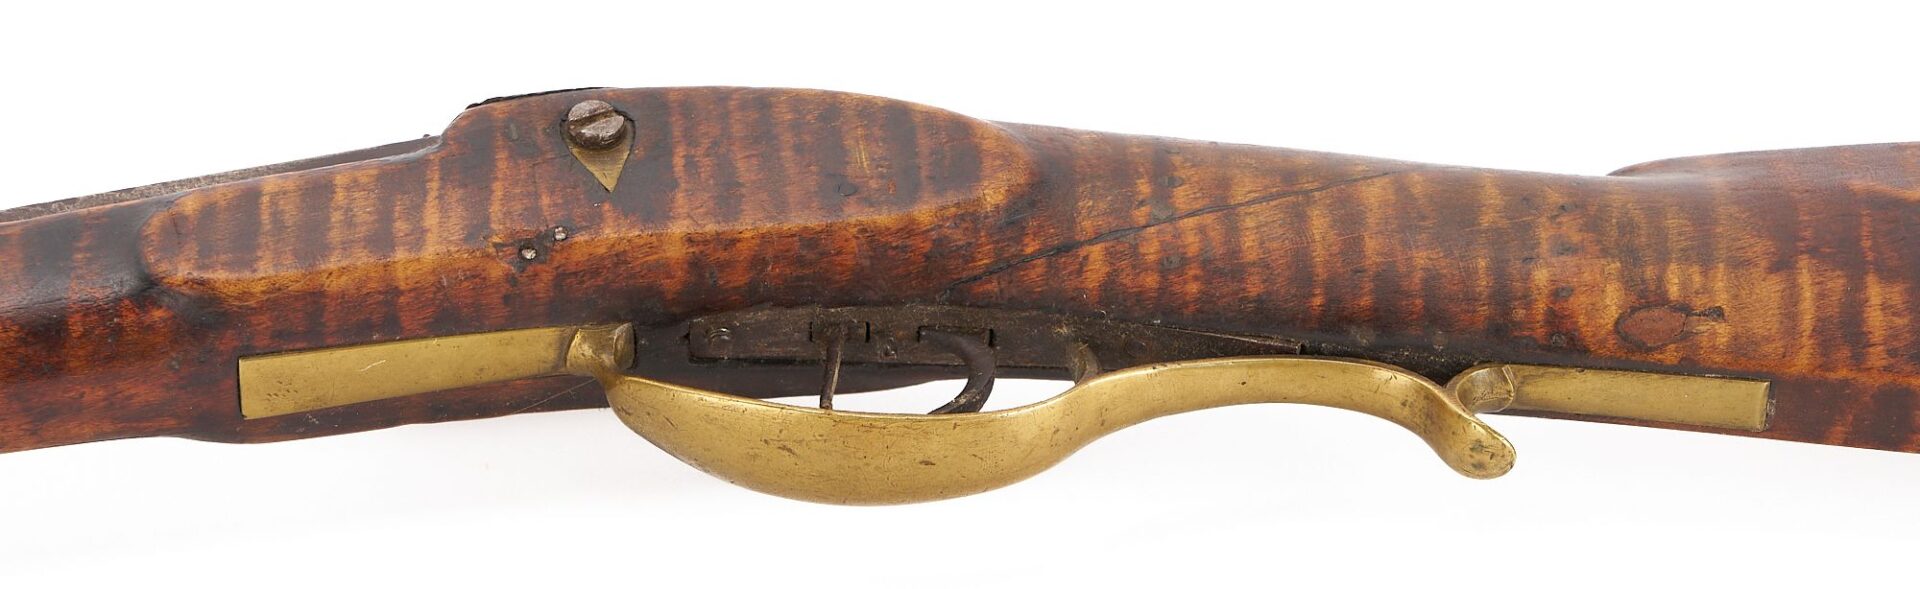 Lot 929: Kentucky Full Stock Long Rifle